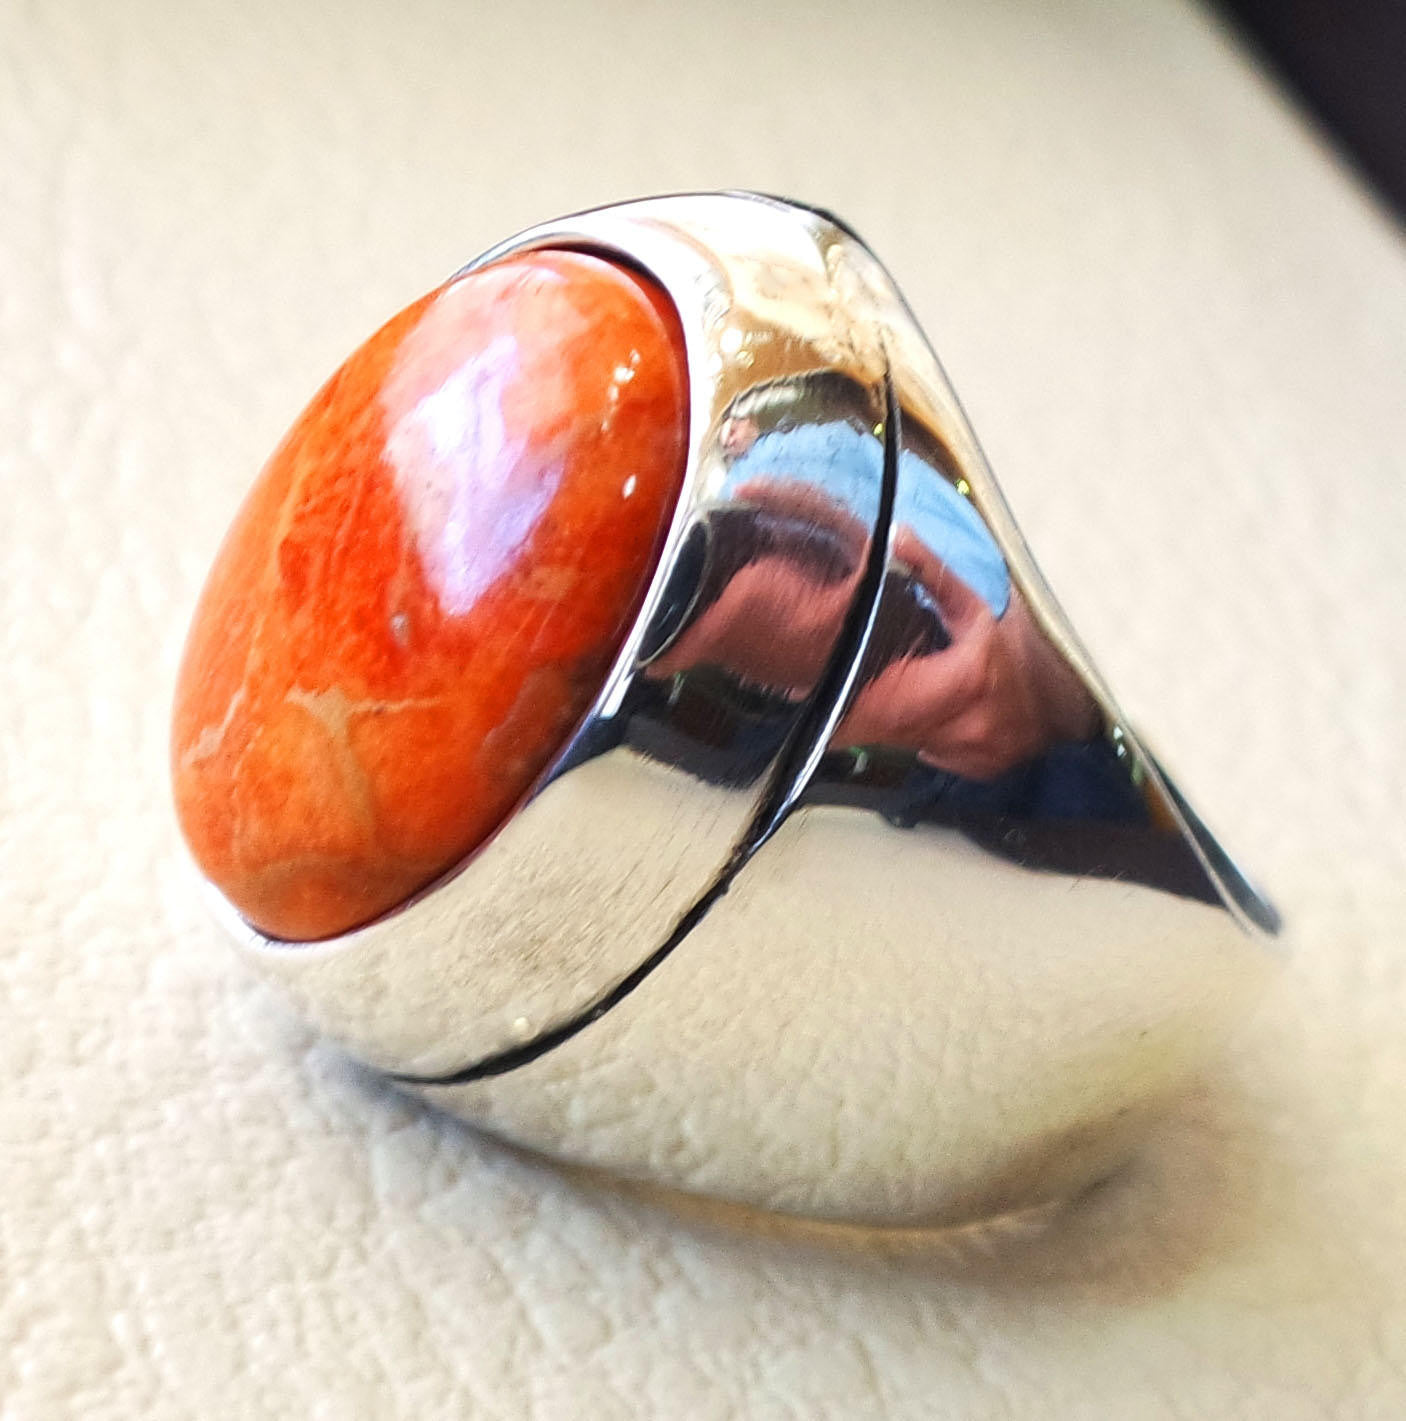 Éponge Coral Murjan Heavy Men Ring orange to Red Natural Stone sterling silver 925 Vintage turque style toutes les tailles expédition rapide مرجان